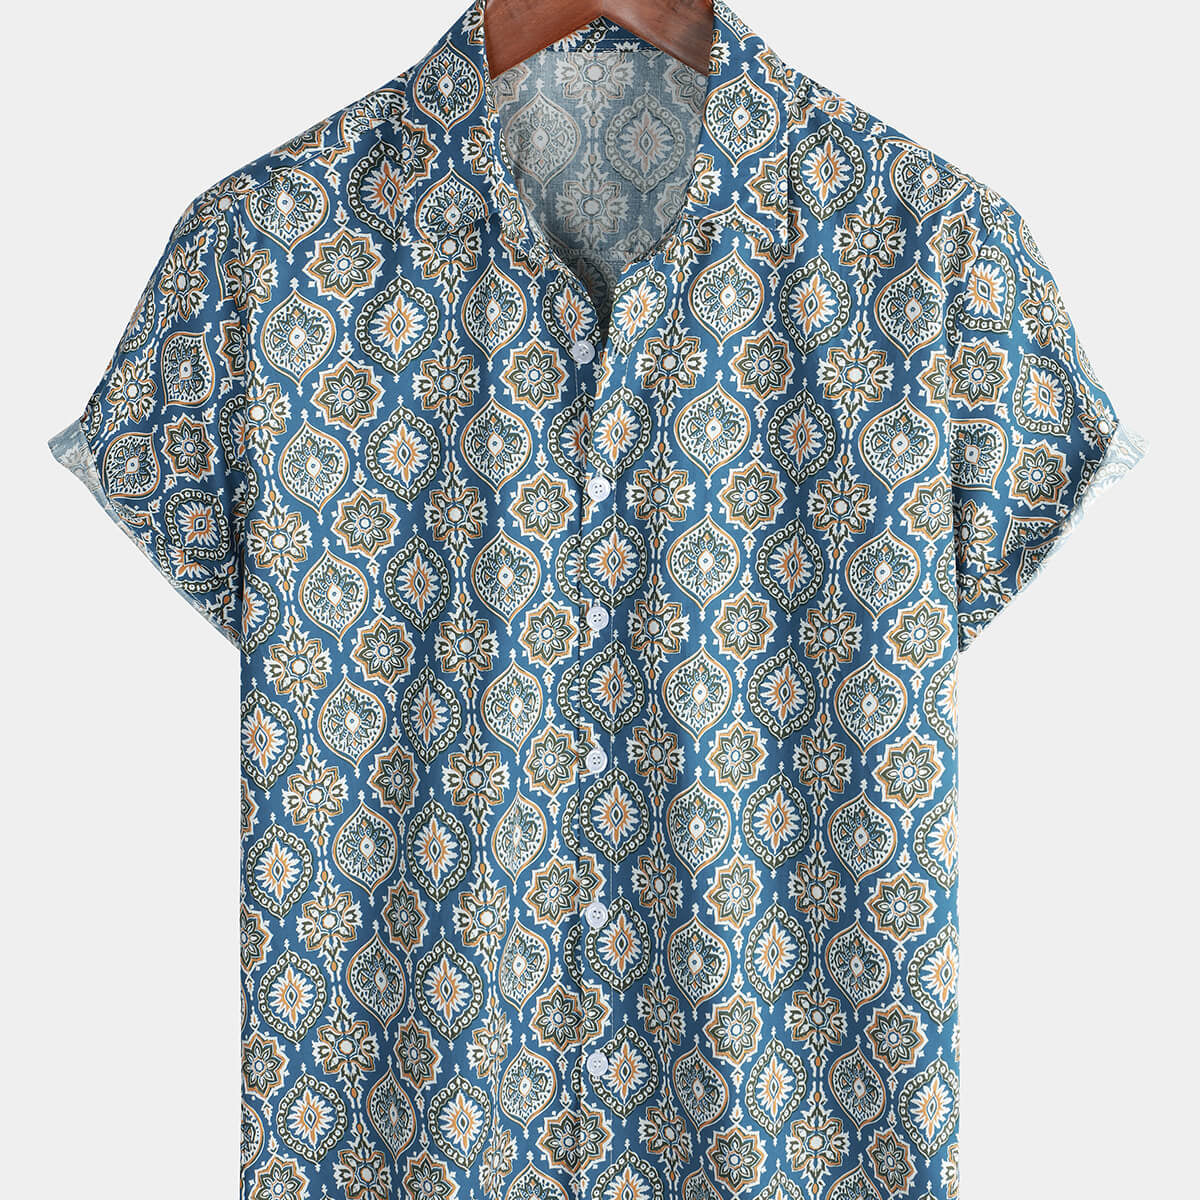 Men's Vintage Holiday Cotton Summer Floral Button Up Blue Short Sleeve Shirt